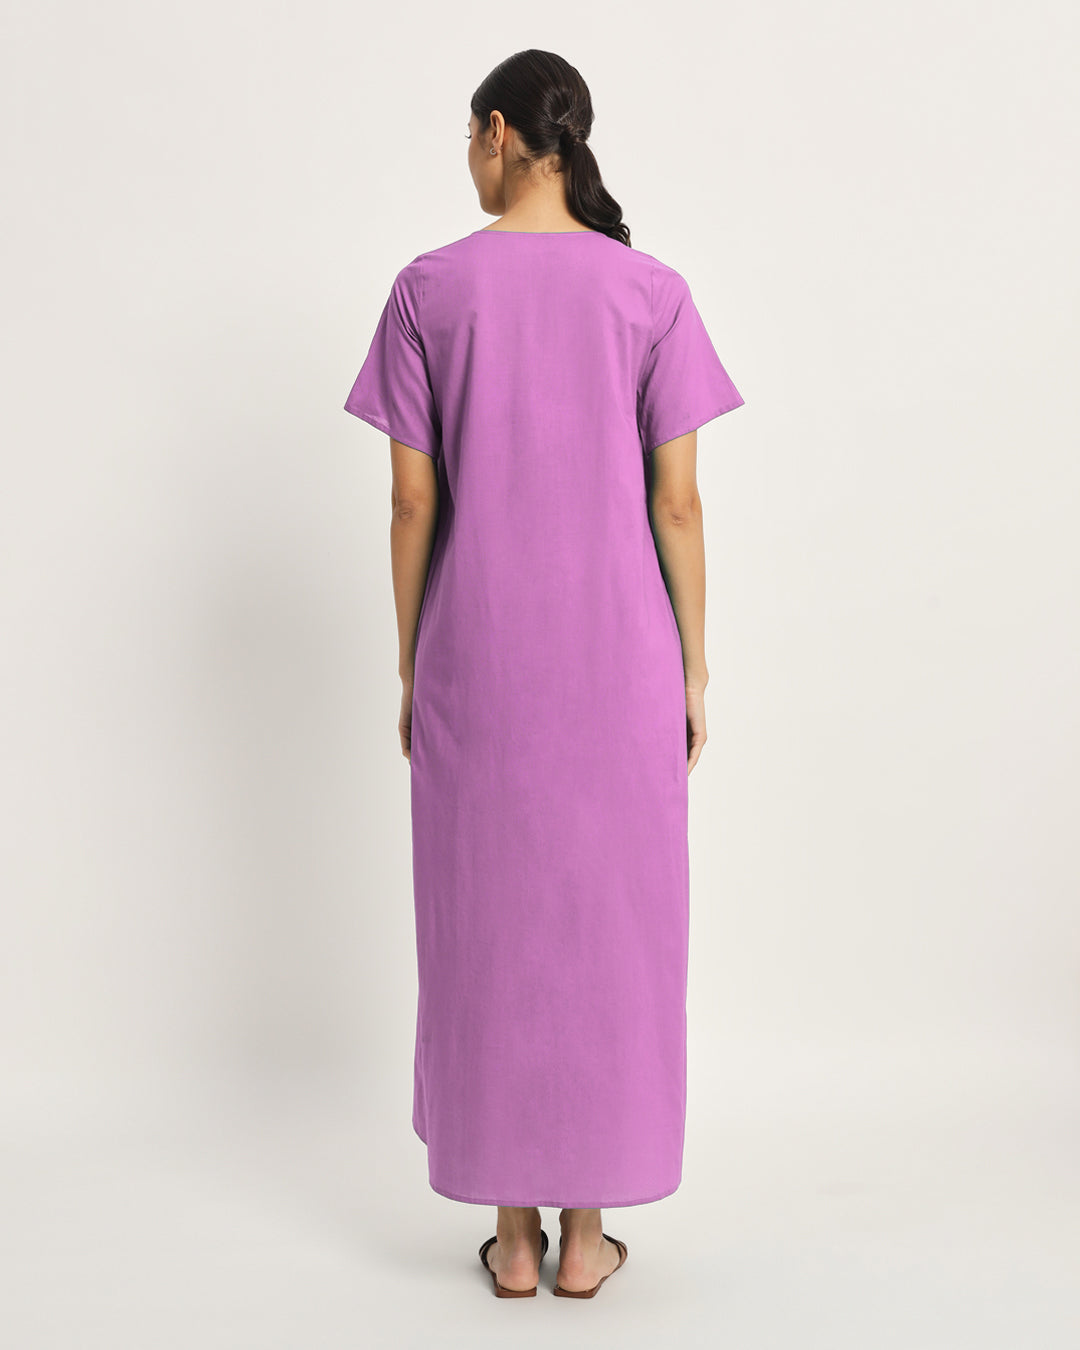 Combo: Russet Red & Wisteria Purple Nurture N' Shine Maternity & Nursing Dress